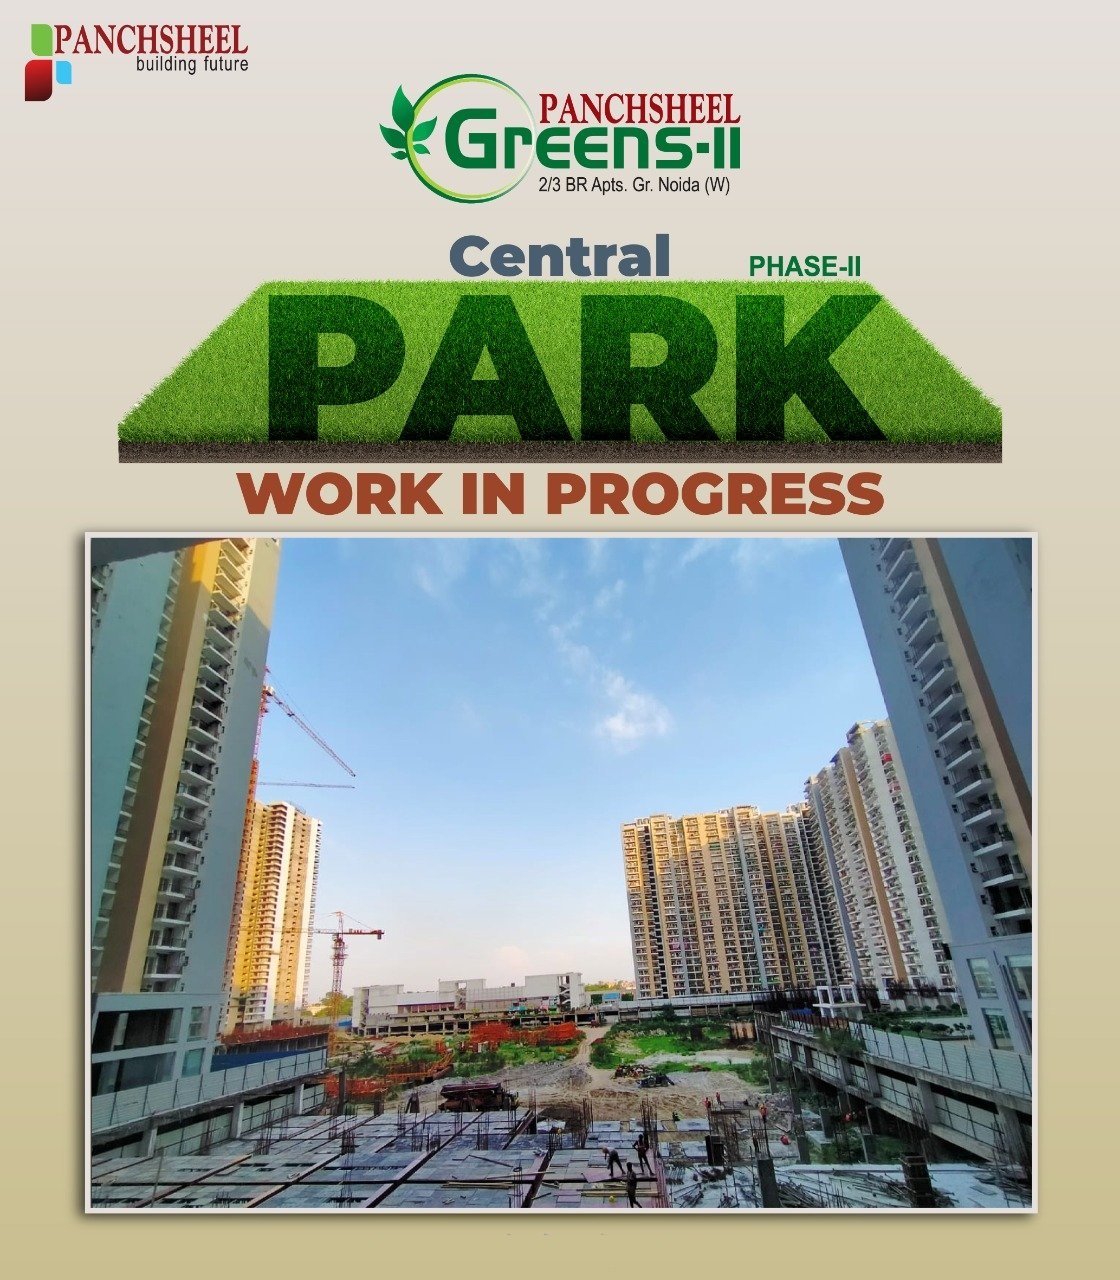 Central Park work in progress at Panchsheel Greens 2, Greater Noida West